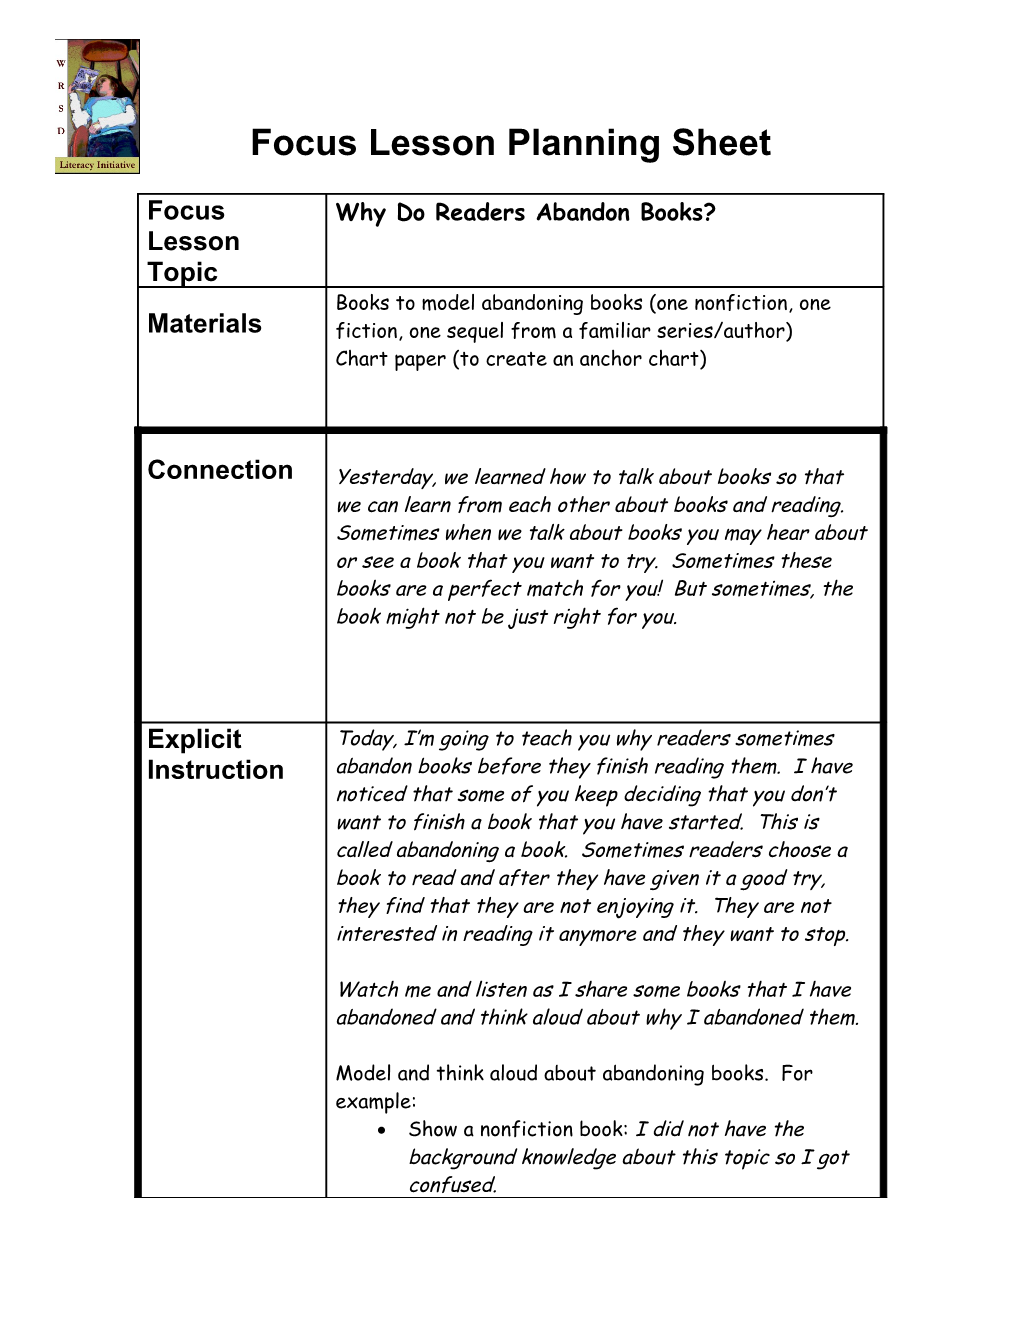 Focus Lesson Planning Sheet s3